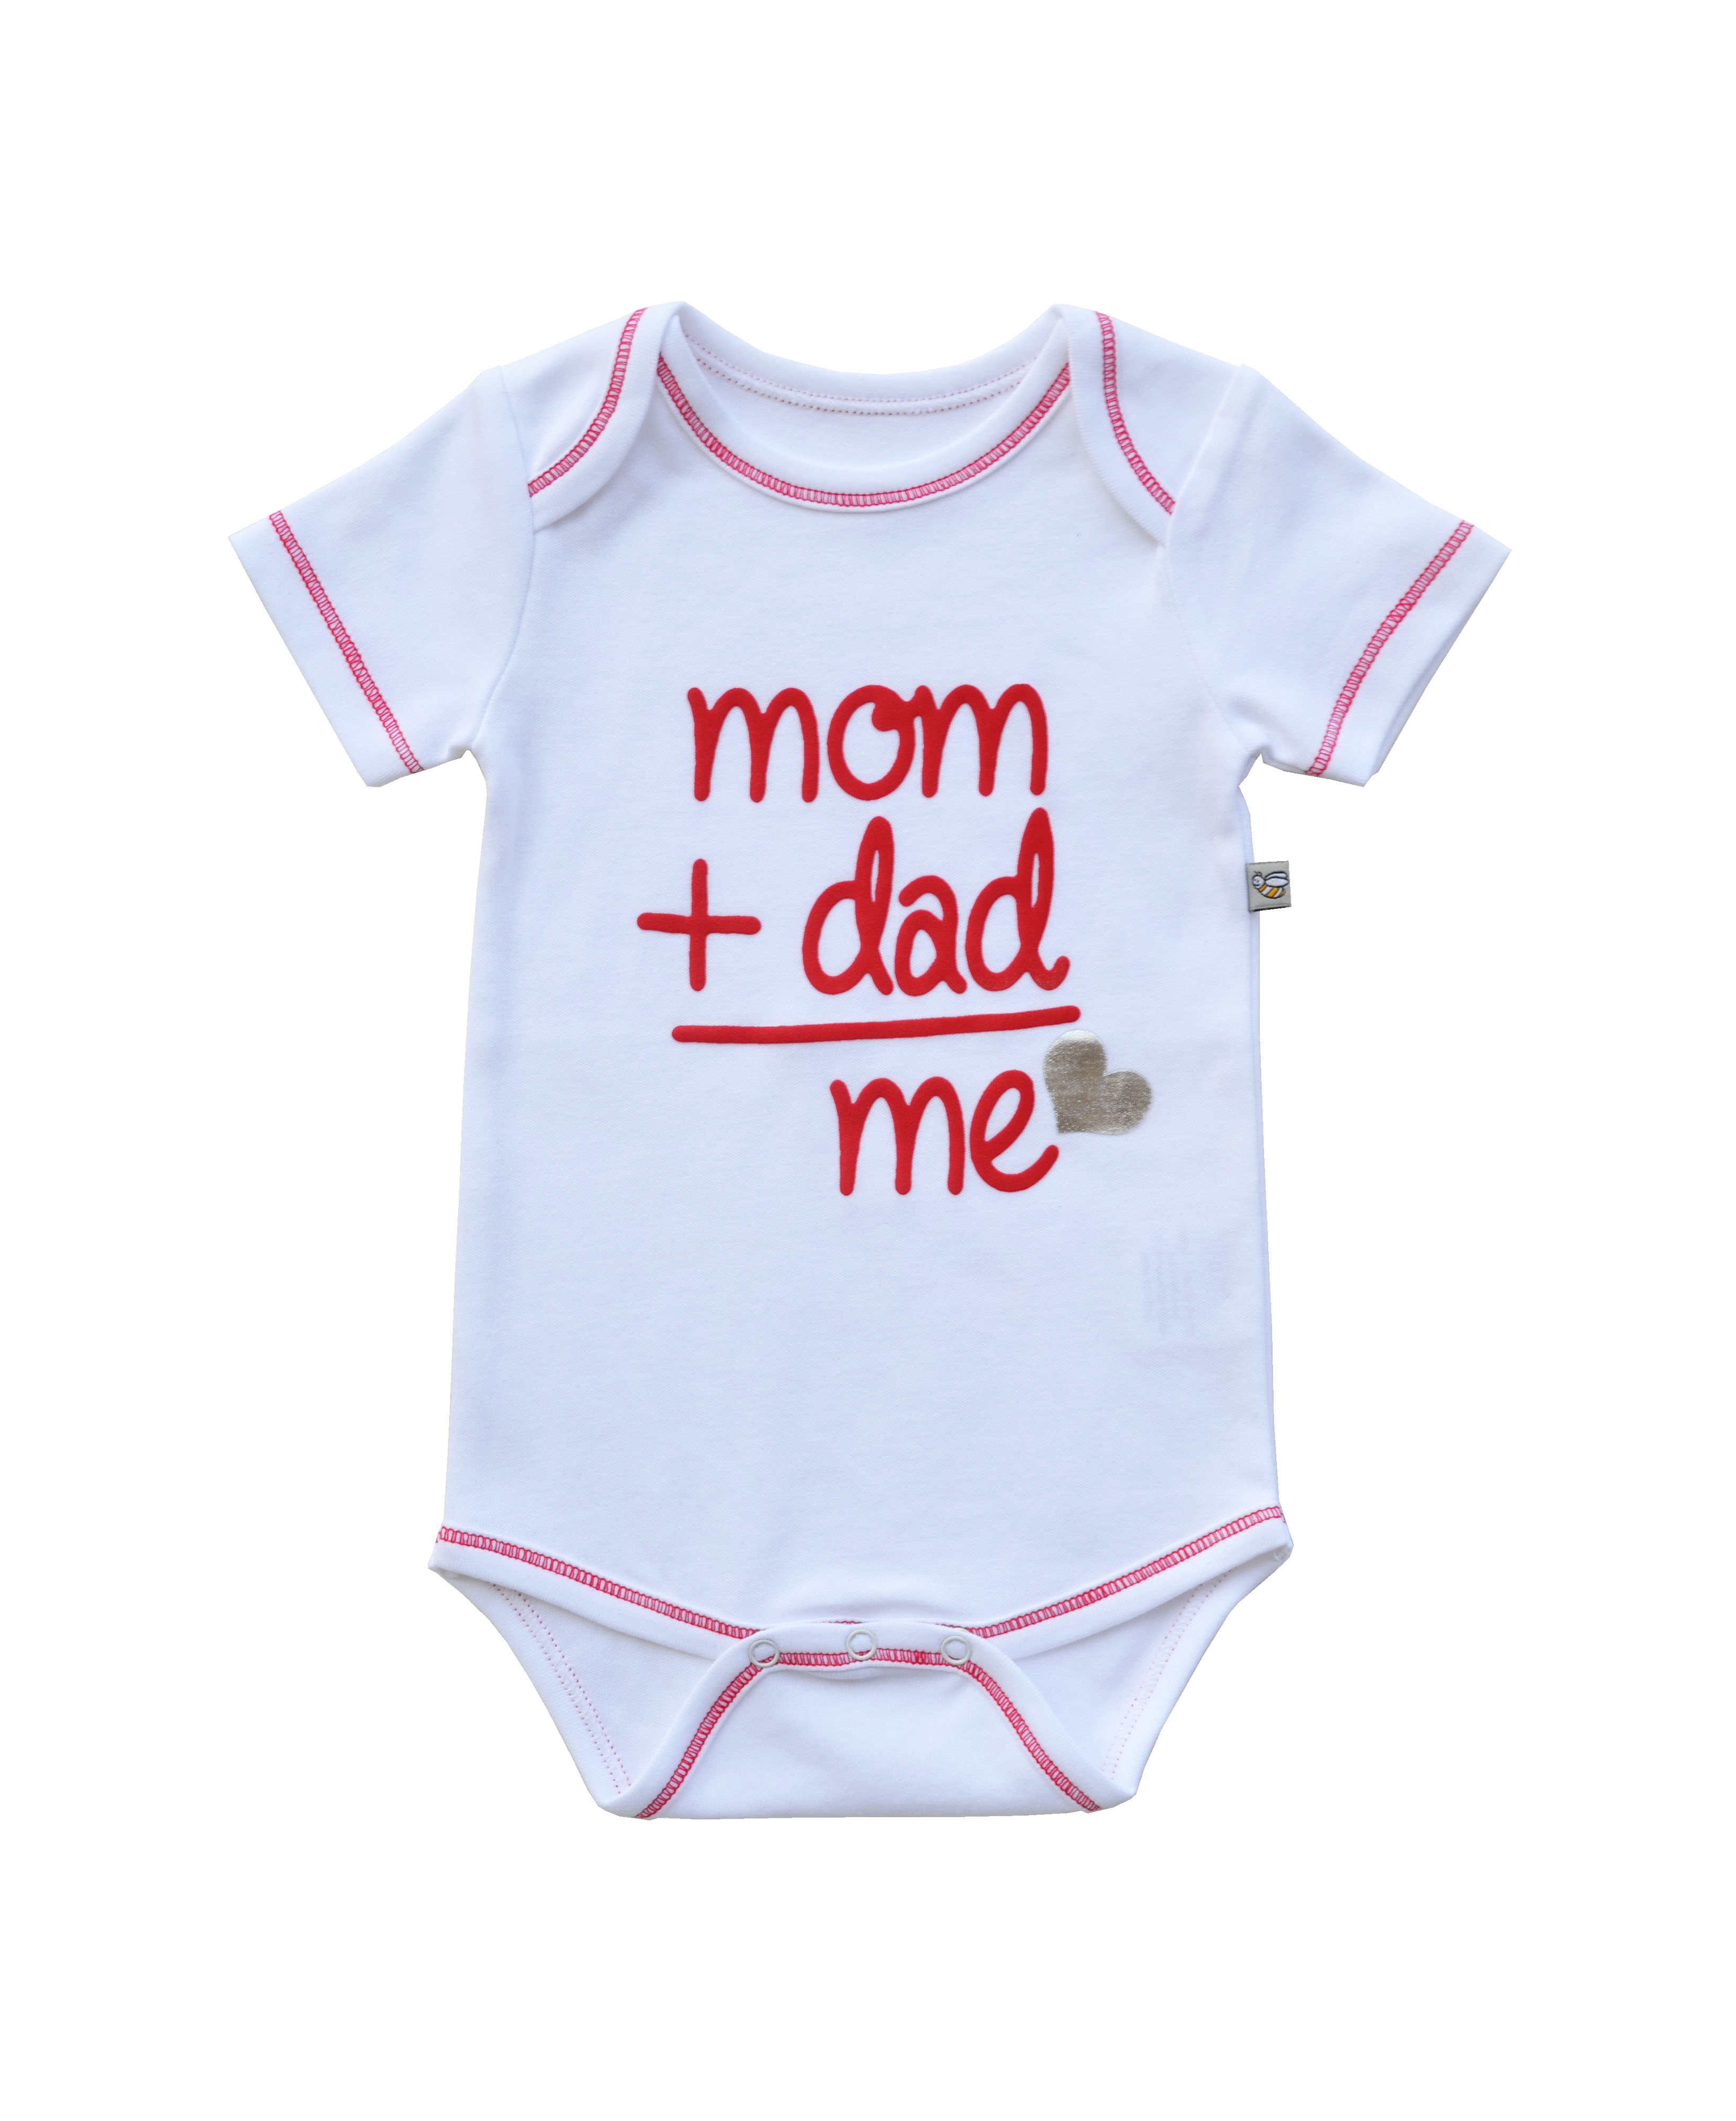 Mom + Dad= Me Print On White Baby Romper/Onesie(100% Cotton)